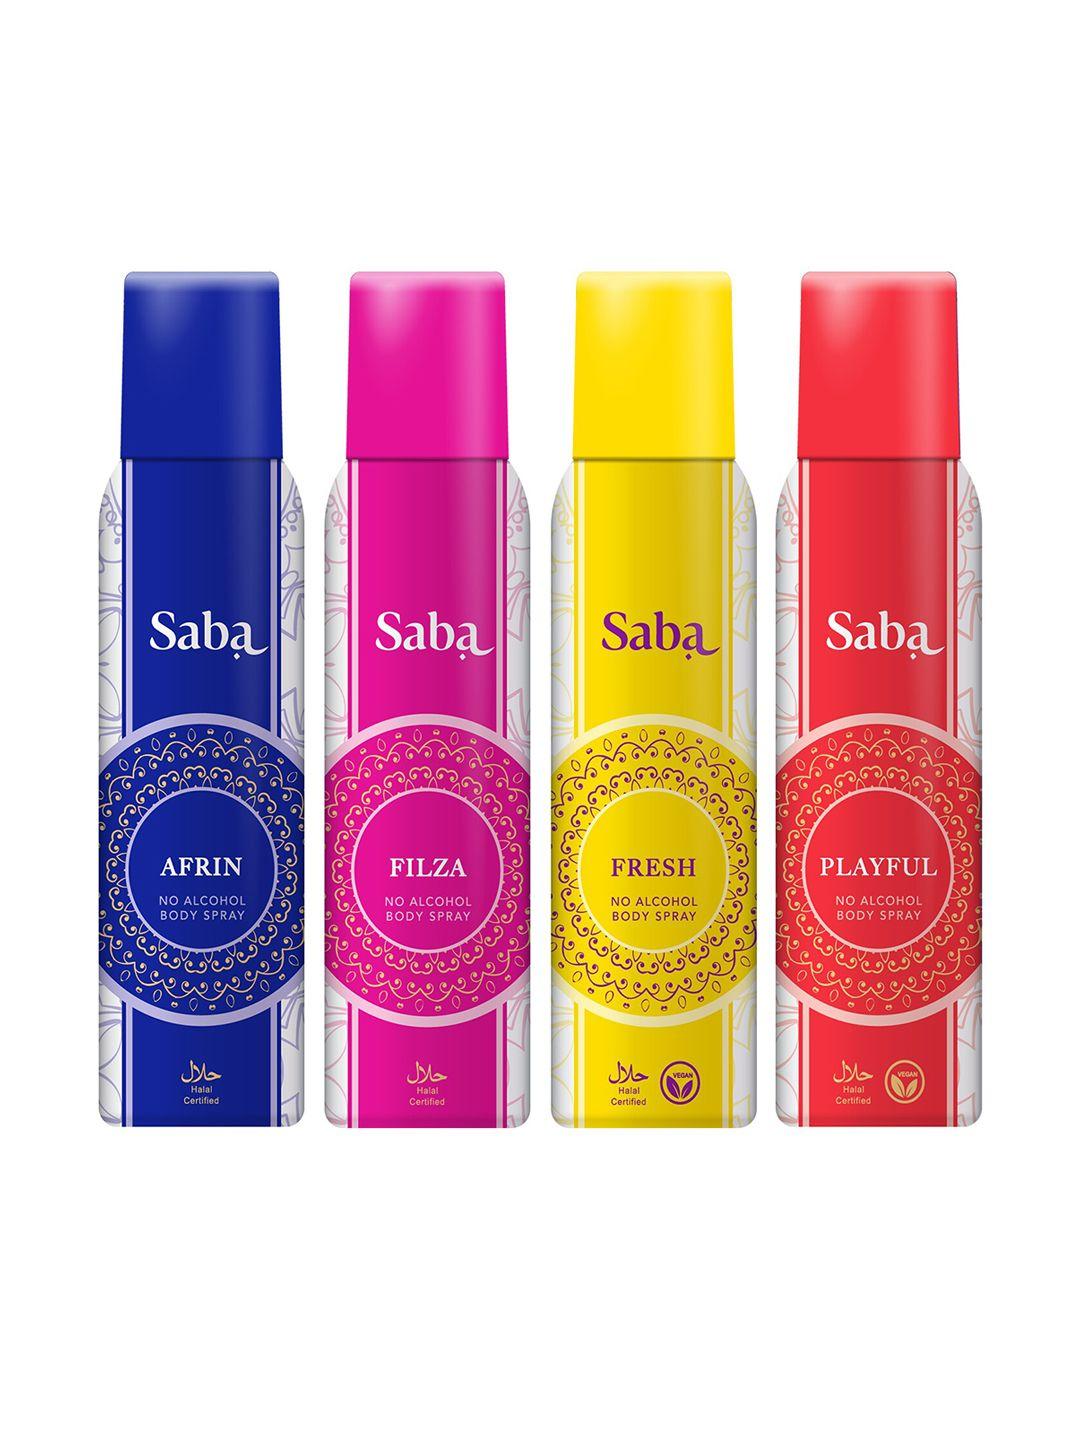 saba women set of afrin, filza, playful & fresh no alcohol body spray - 150 ml each